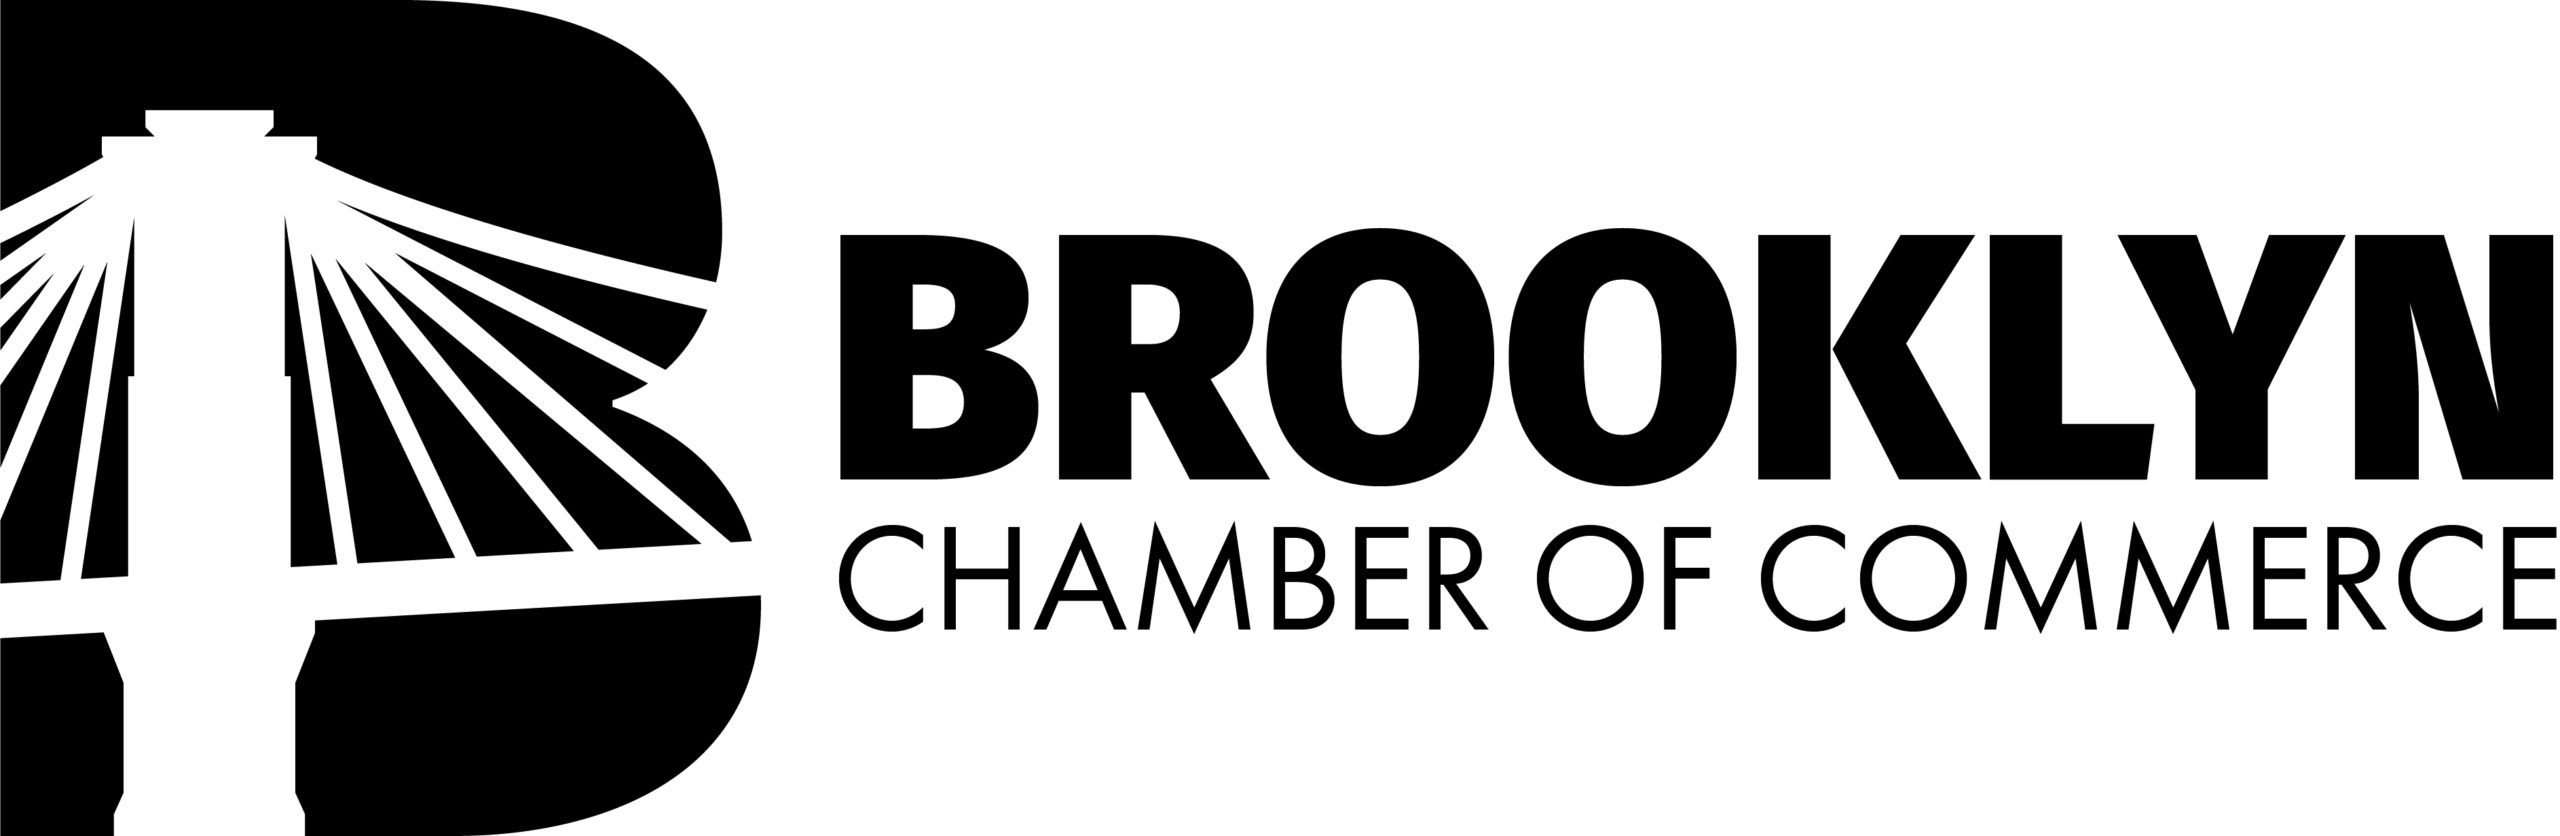 Brooklyn Chamber of Commerce logo